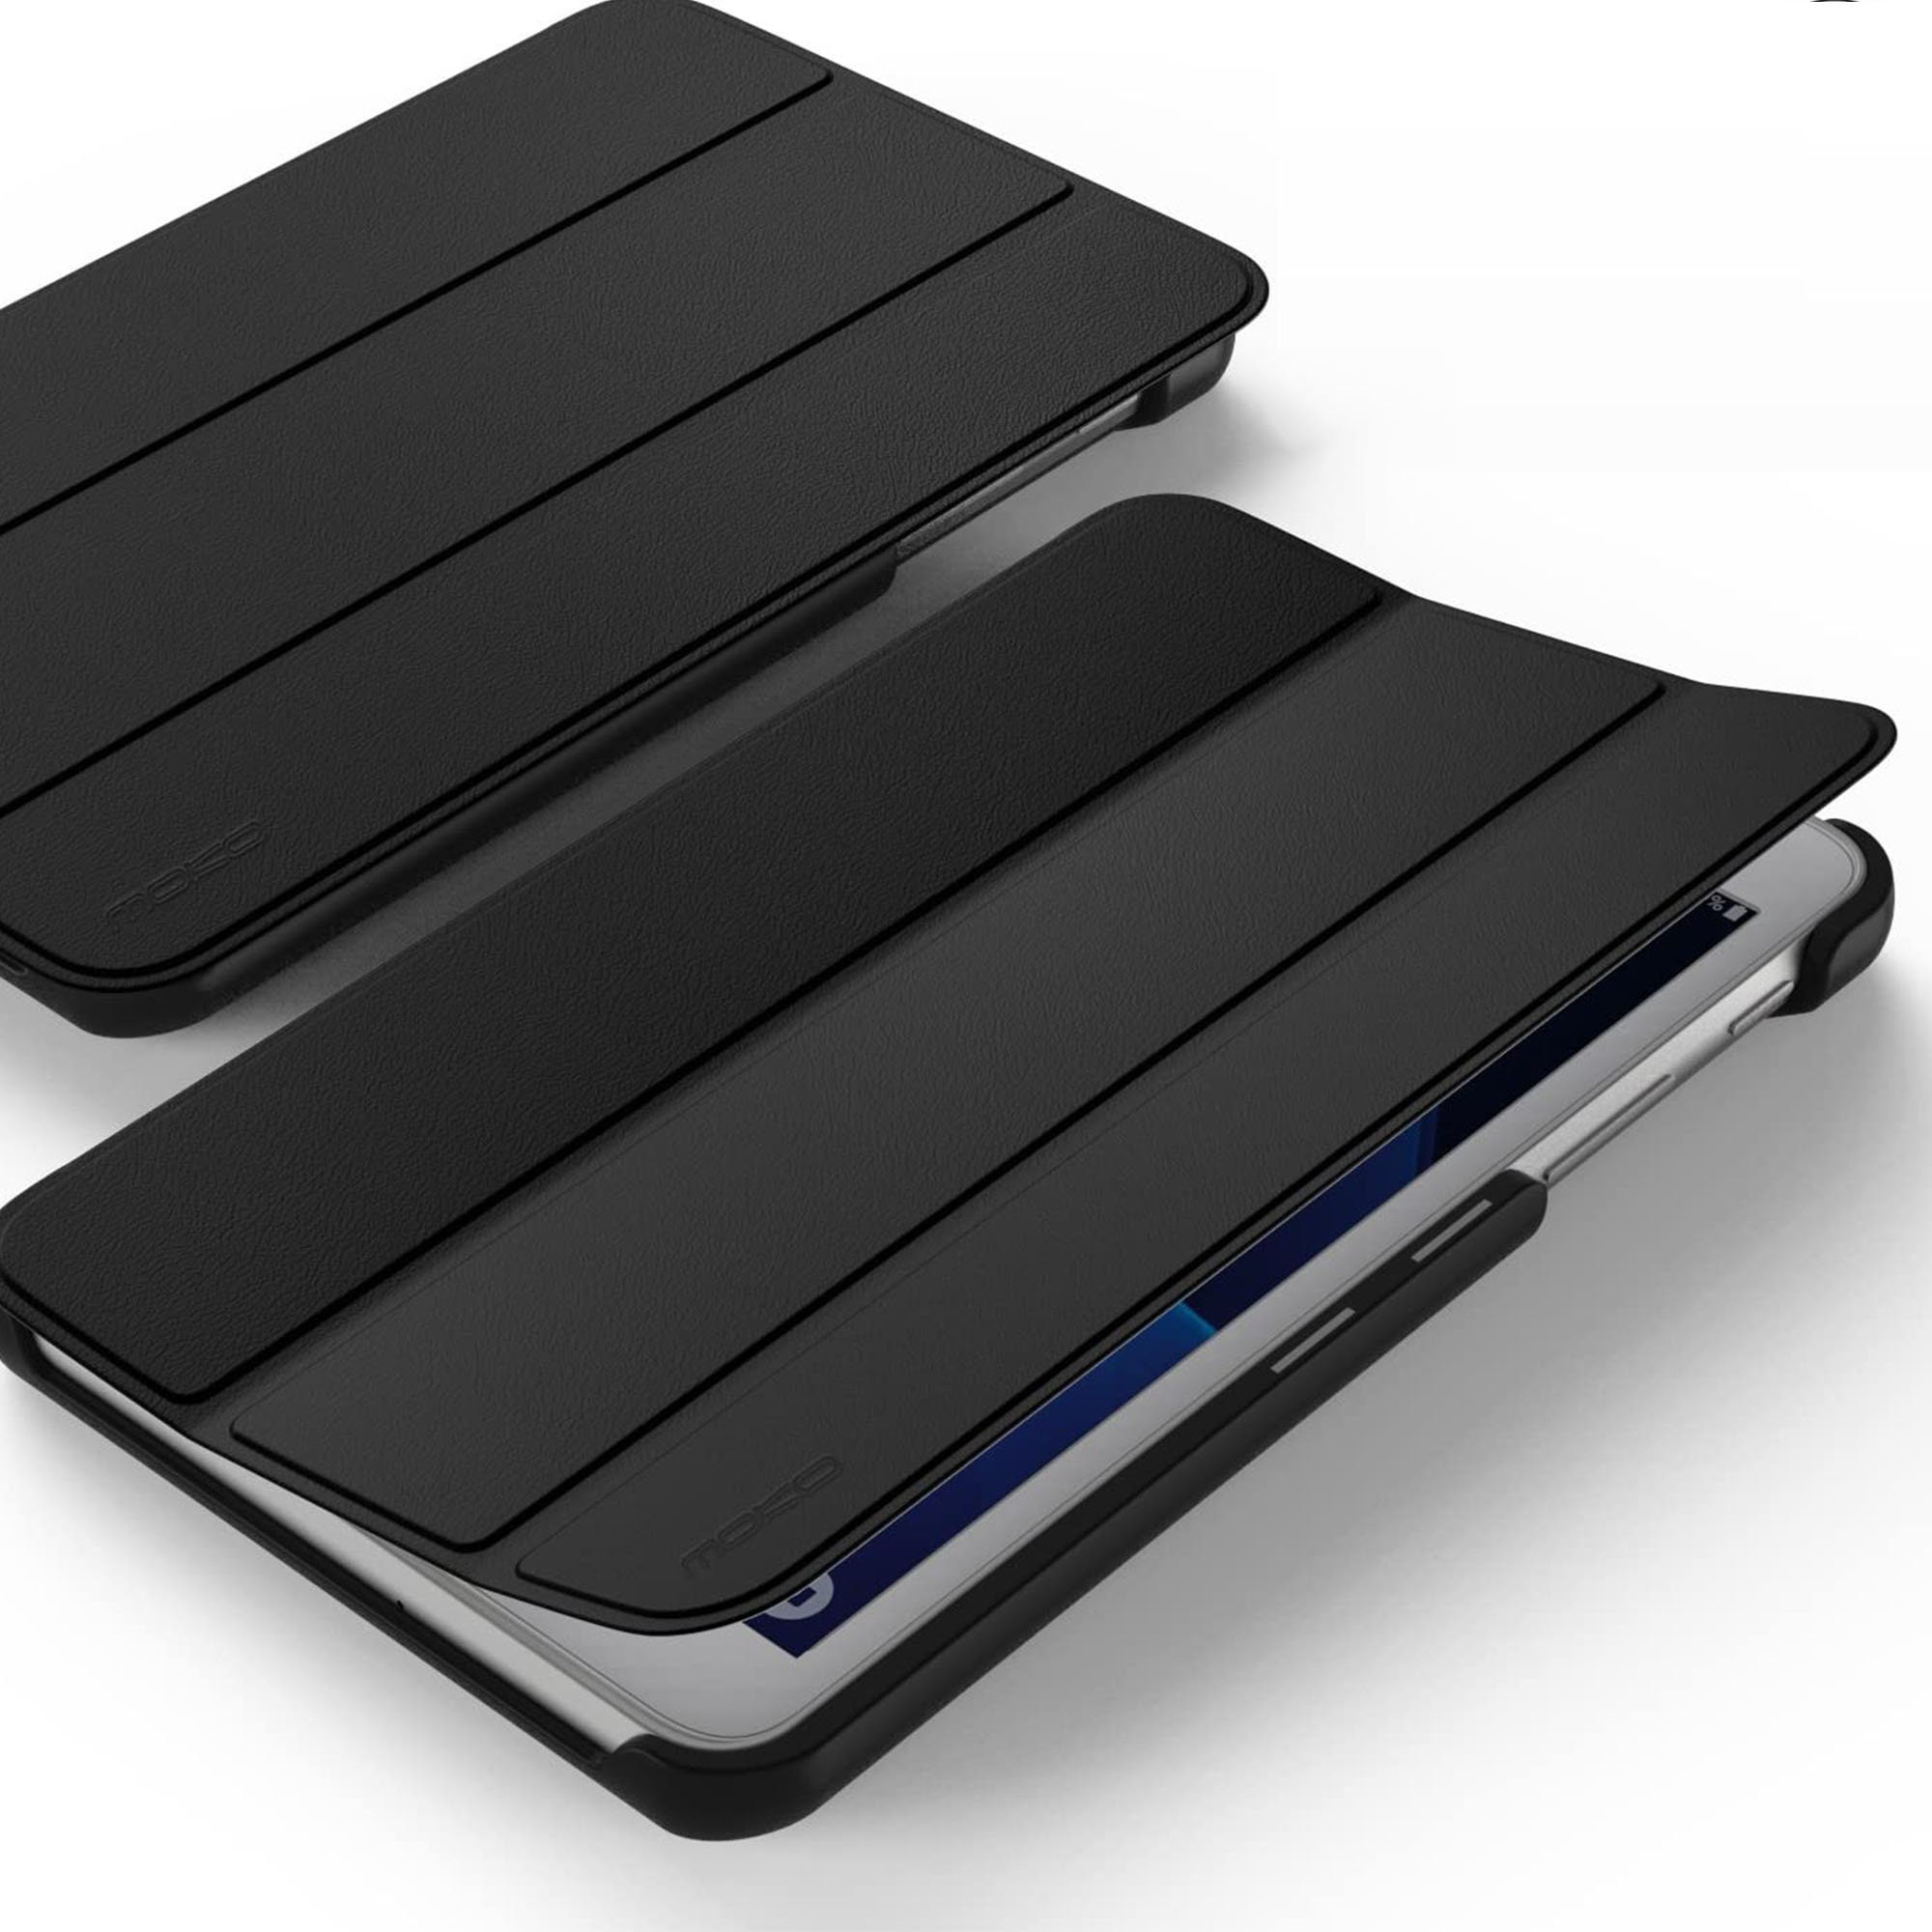 Personalized Saint Bernard Design Case-Mate Samsung Galaxy Case